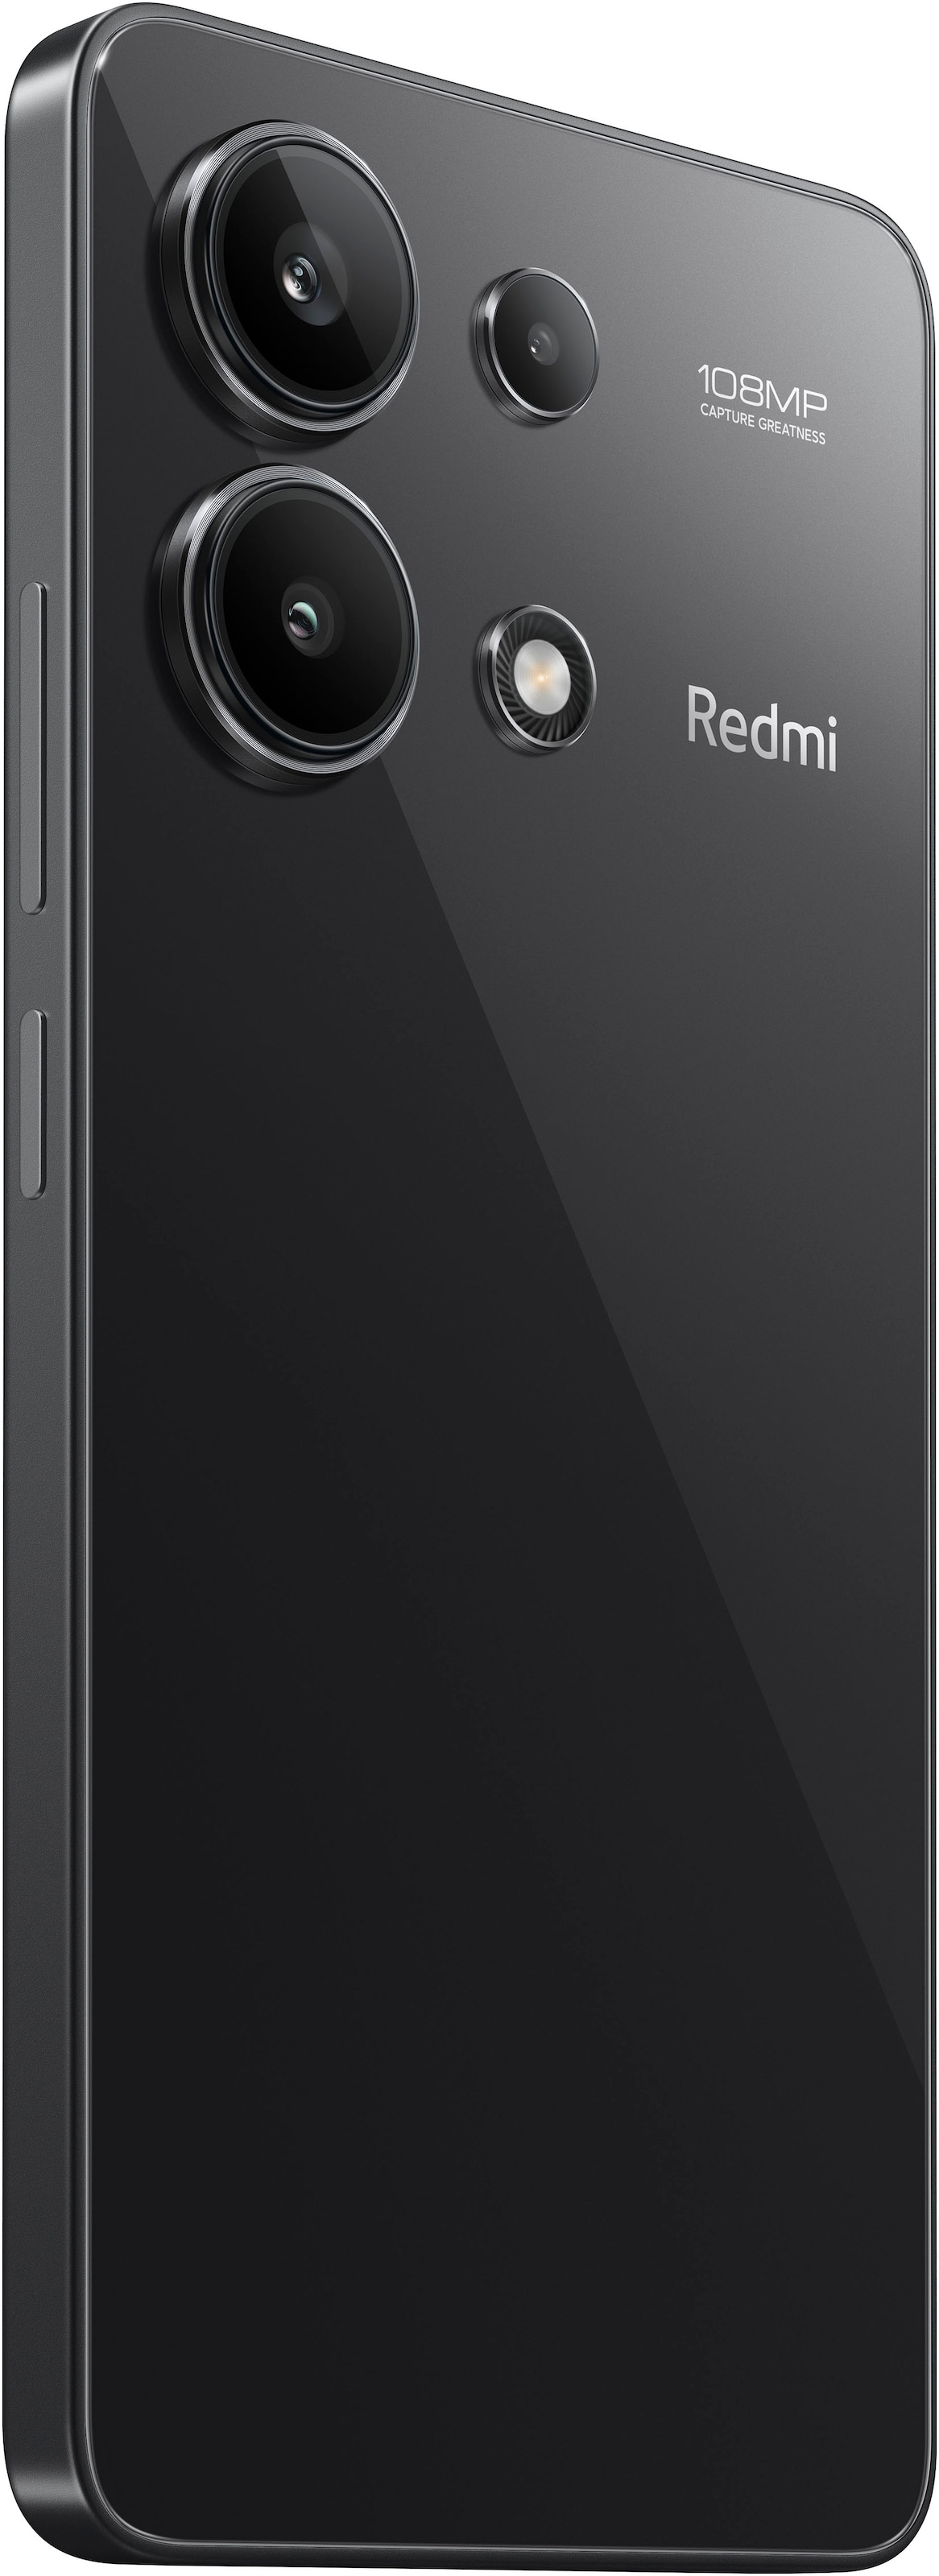 Xiaomi Smartphone »Redmi Note 13 8+128 GB«, Midnight Black, 16,94 cm/6,67 Zoll, 128 GB Speicherplatz, 108 MP Kamera